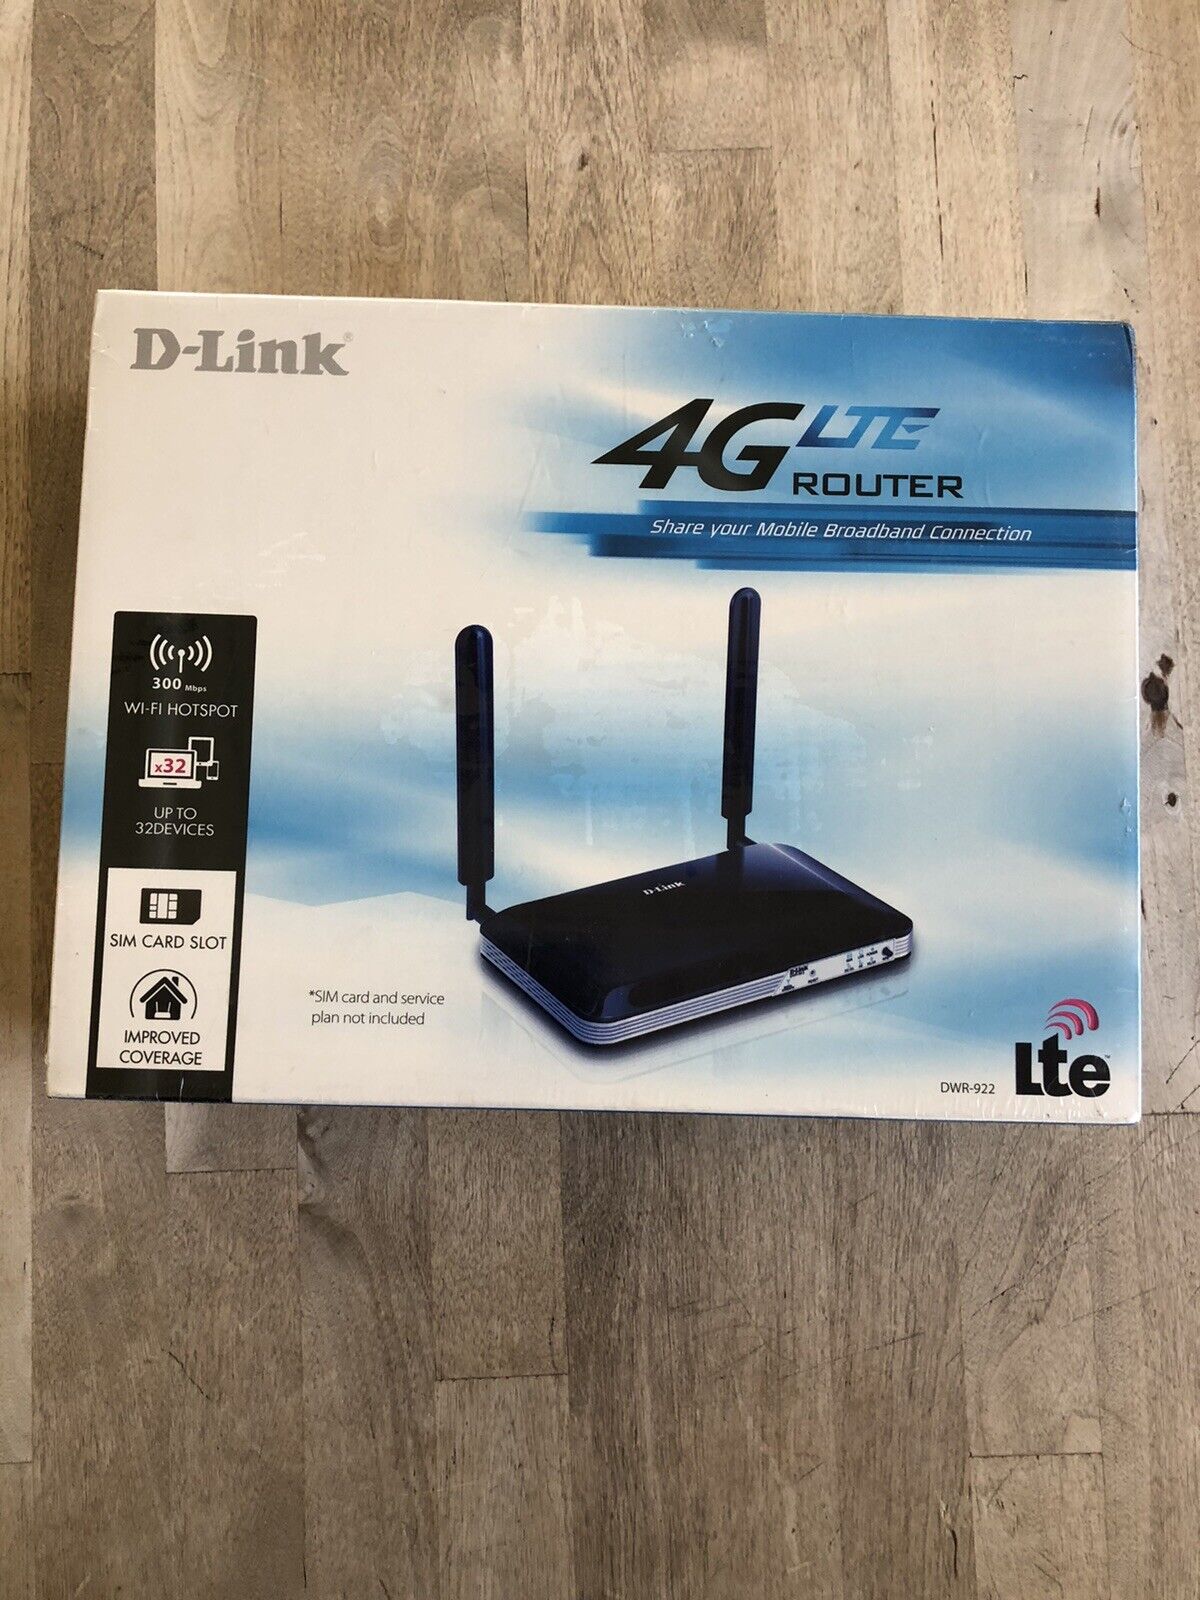 D-link 4G LTE Router 922